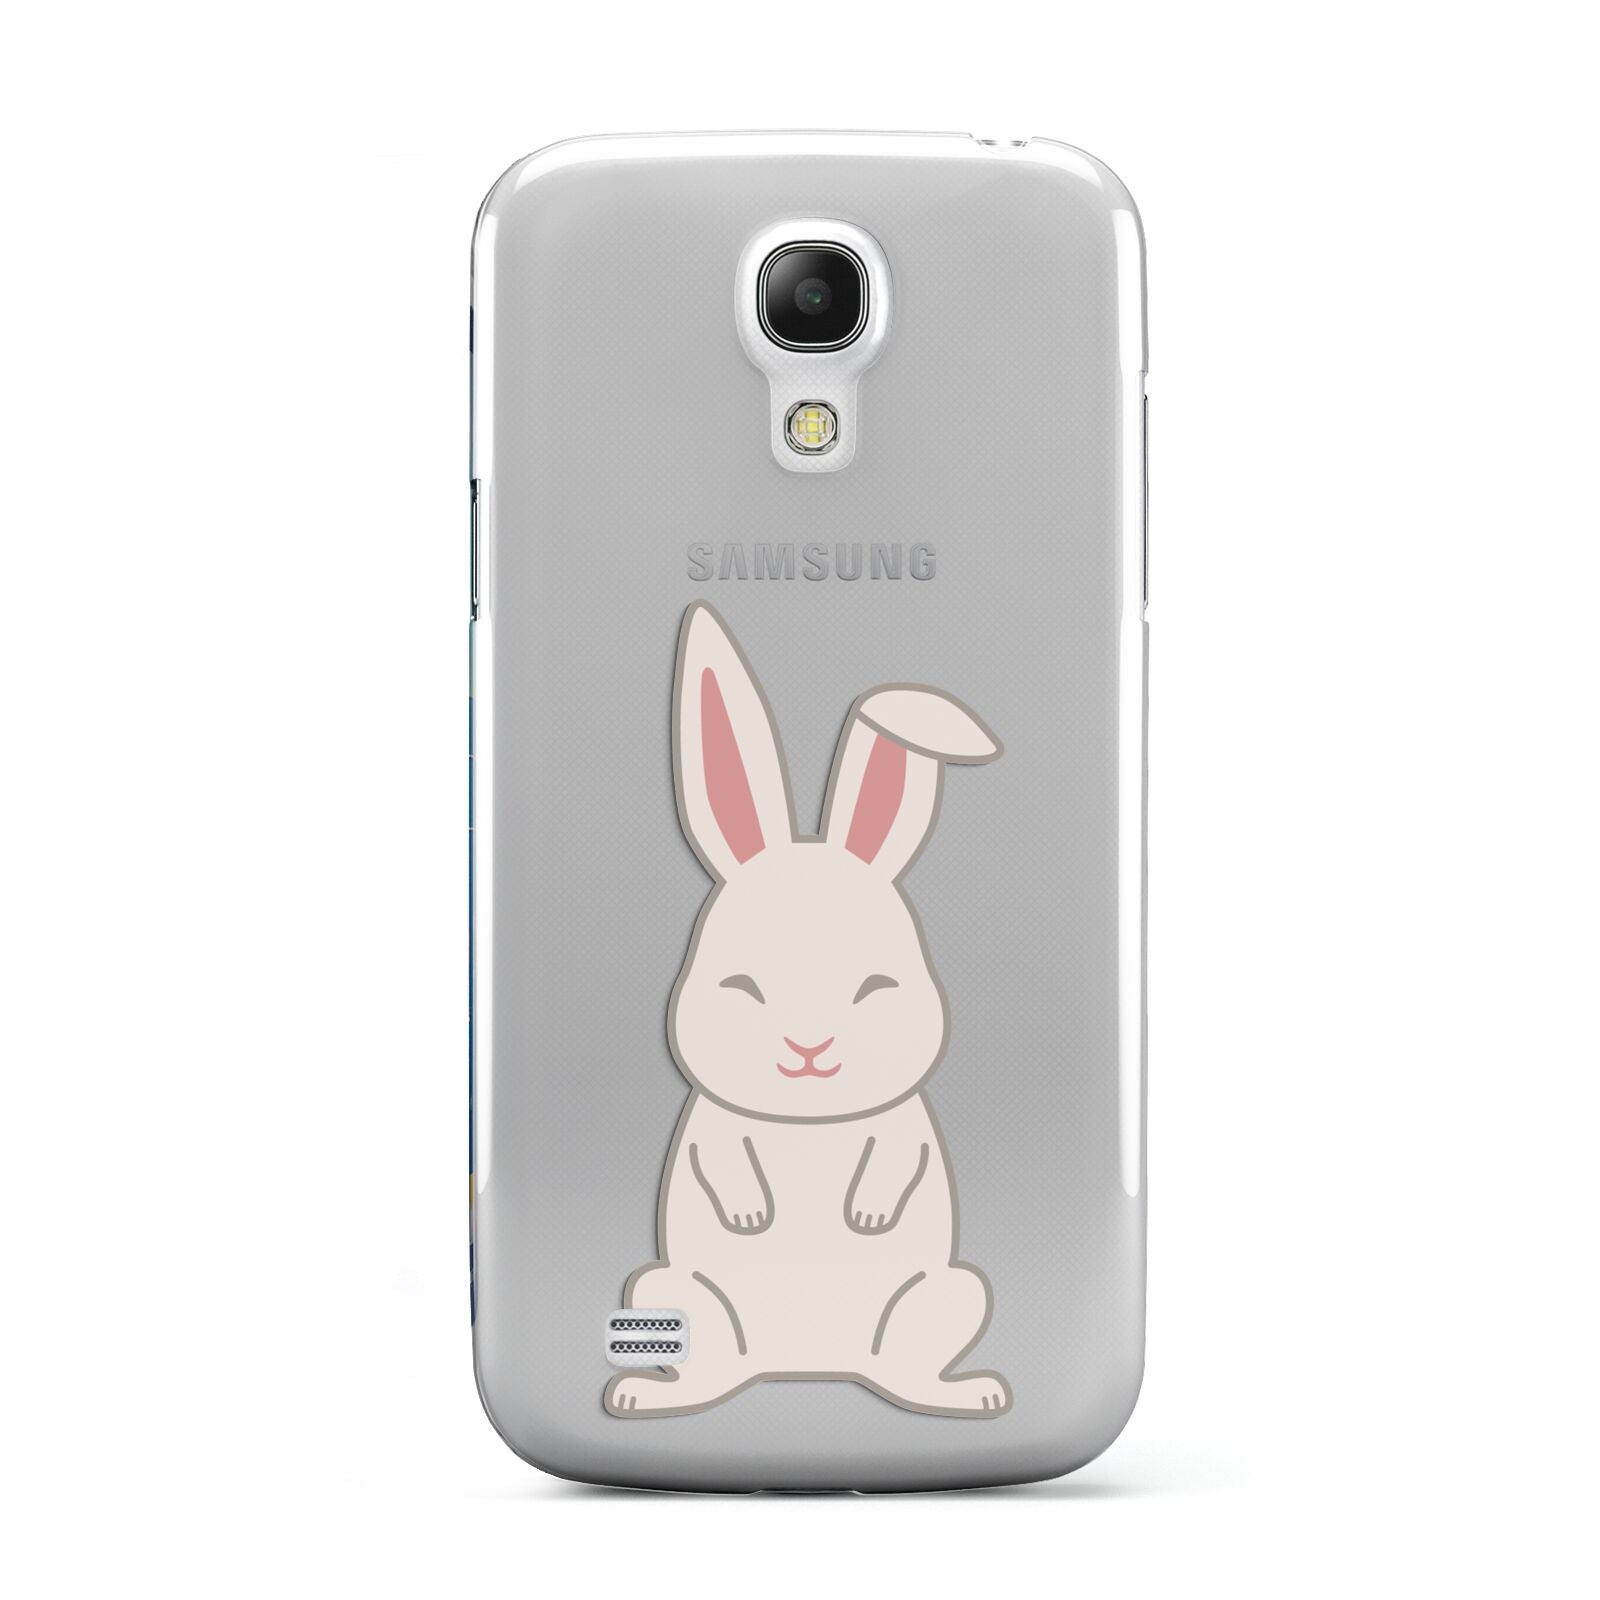 Bunny Samsung Galaxy S4 Mini Case